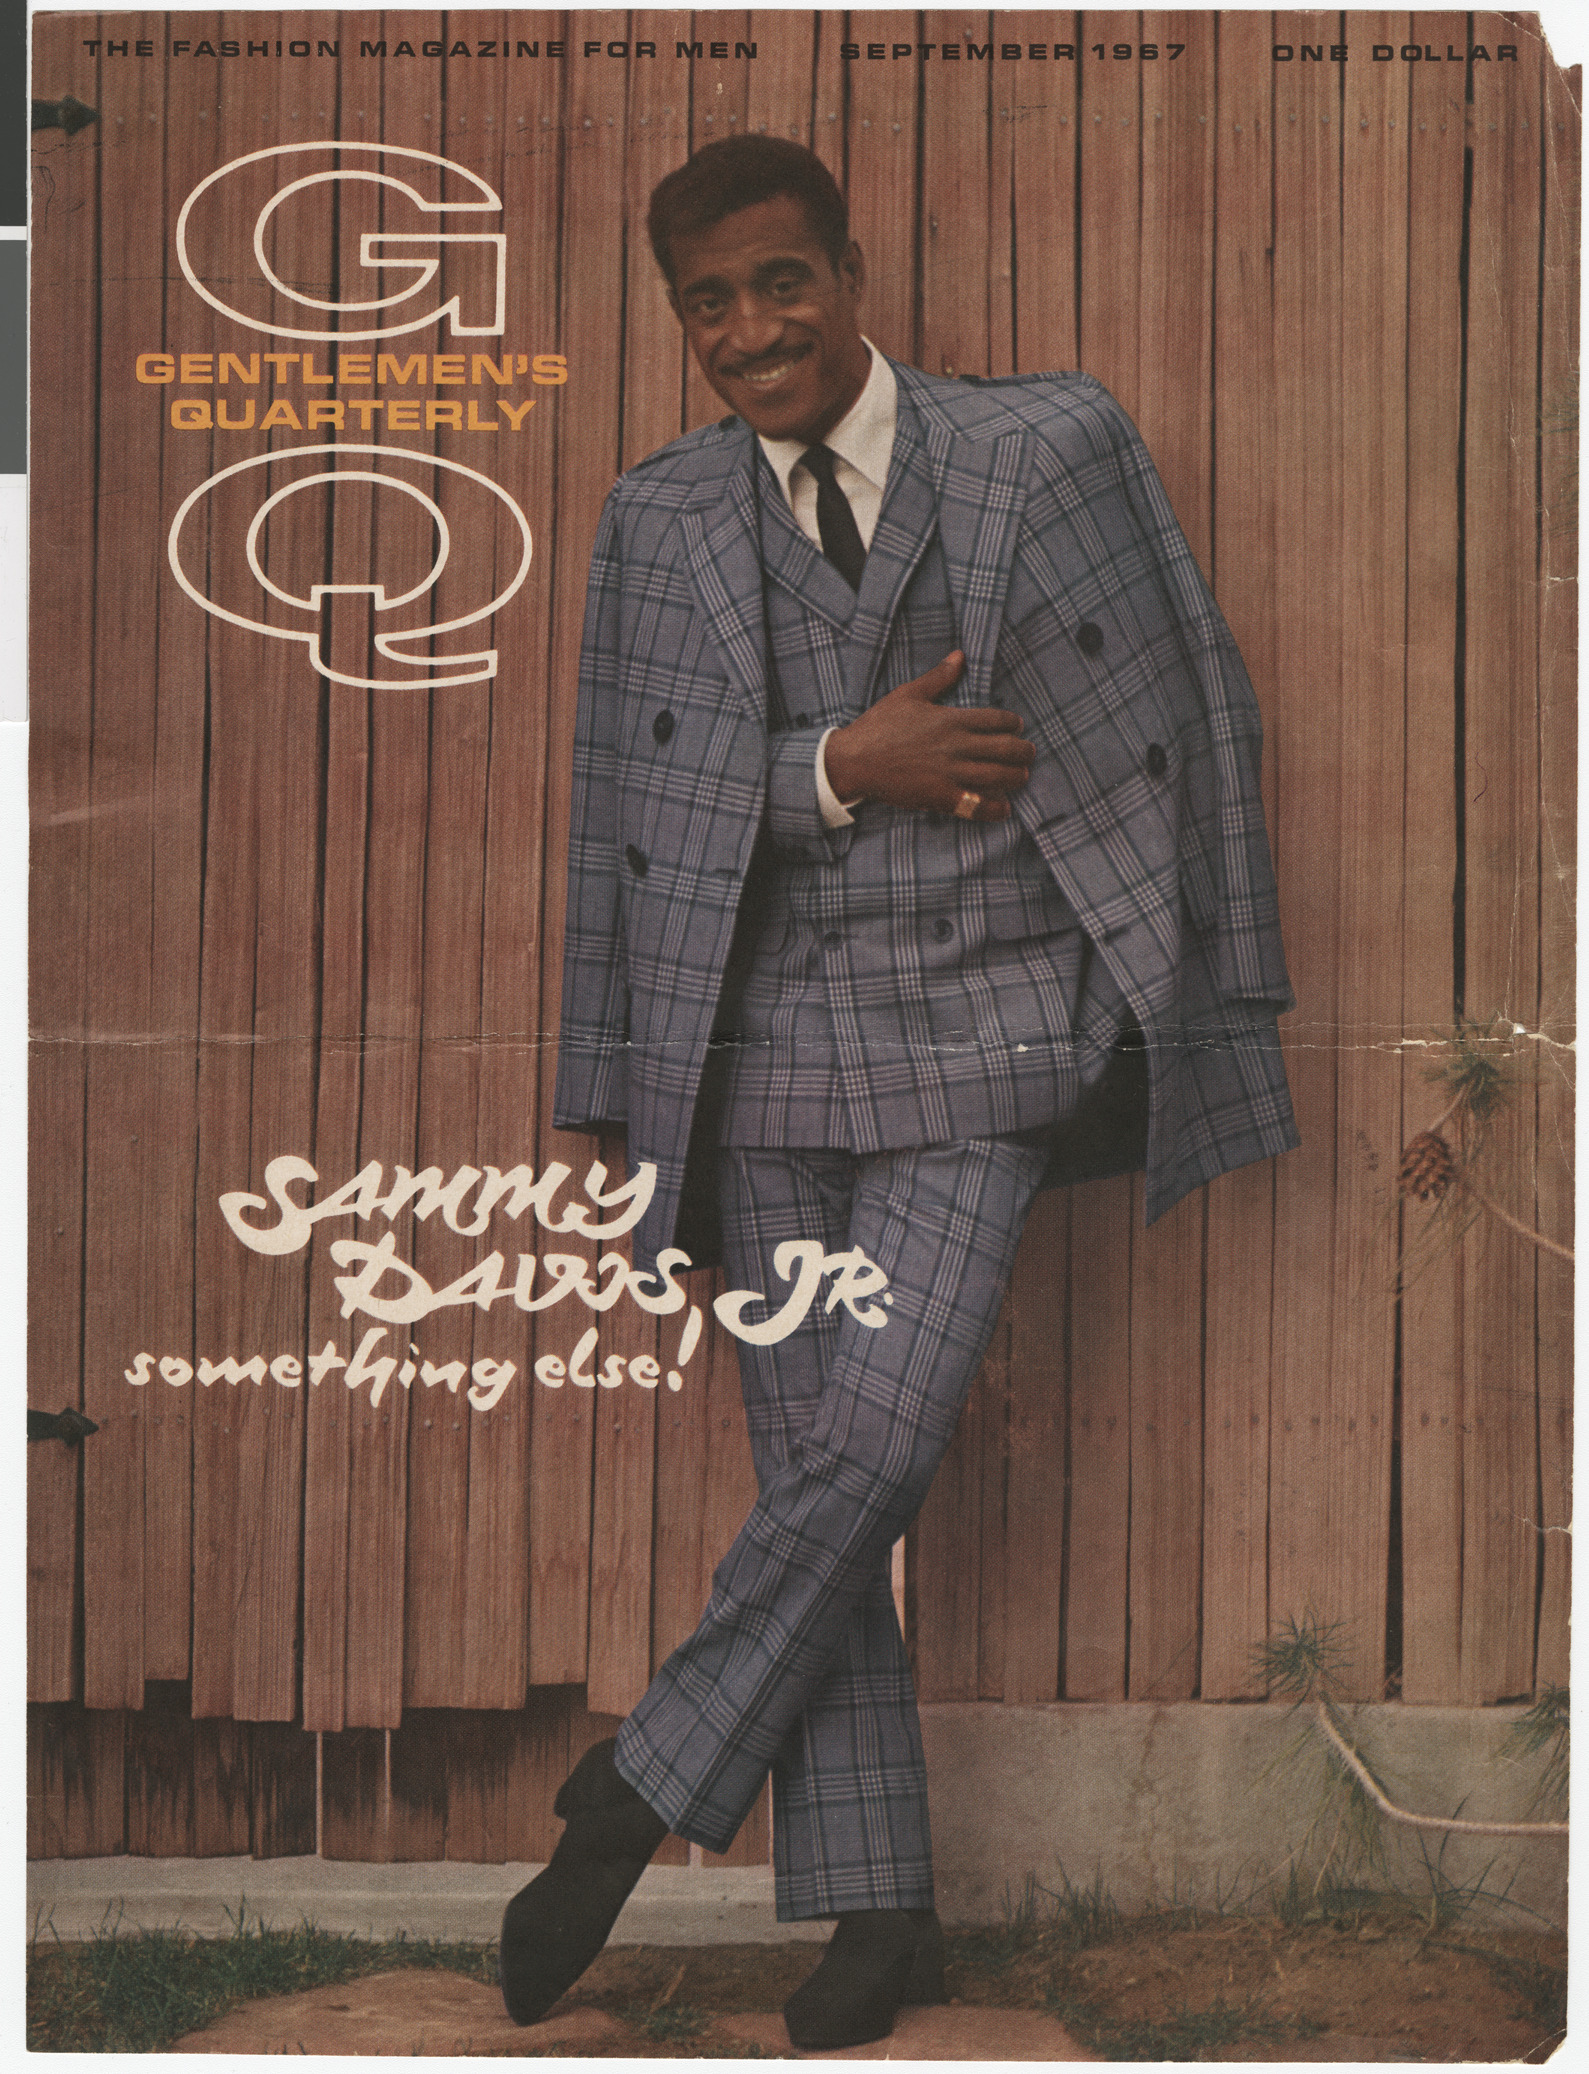 Tear sheet of cover of GQ magazine featuring Sammy Davis, Jr., September 1967